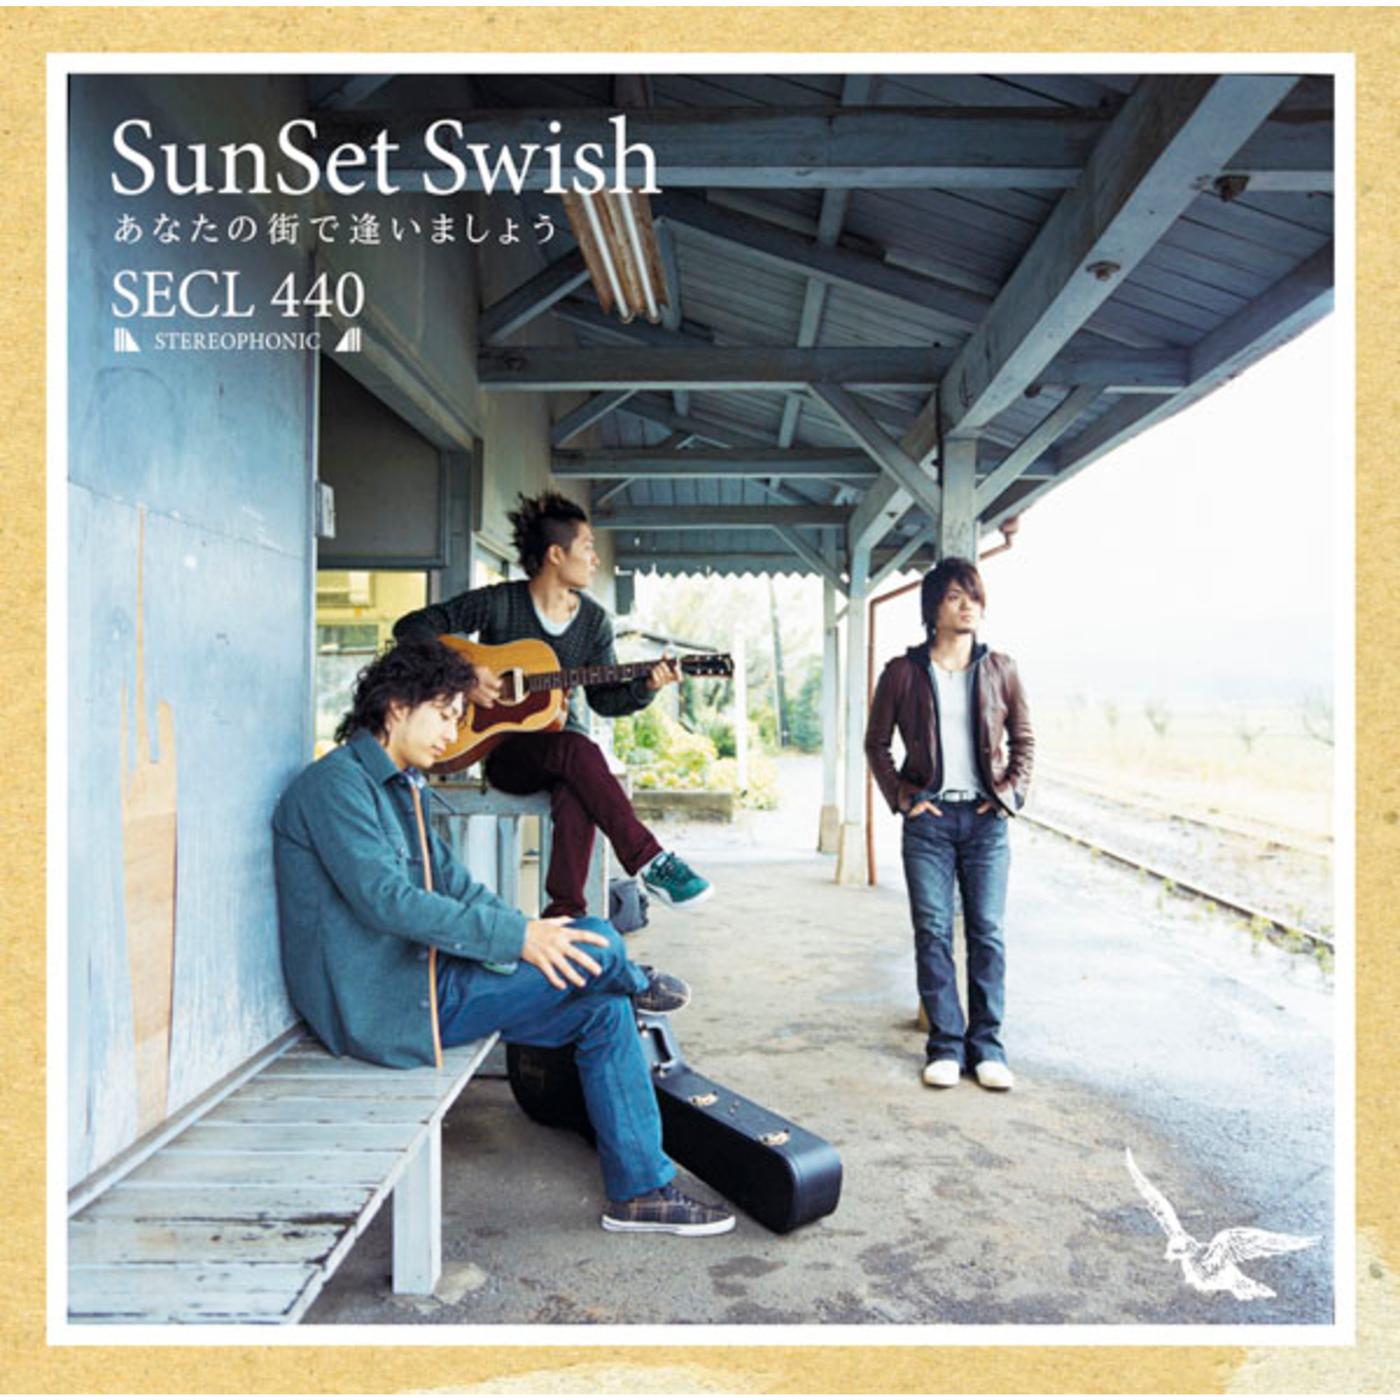 SunSet Swish - I KNOW